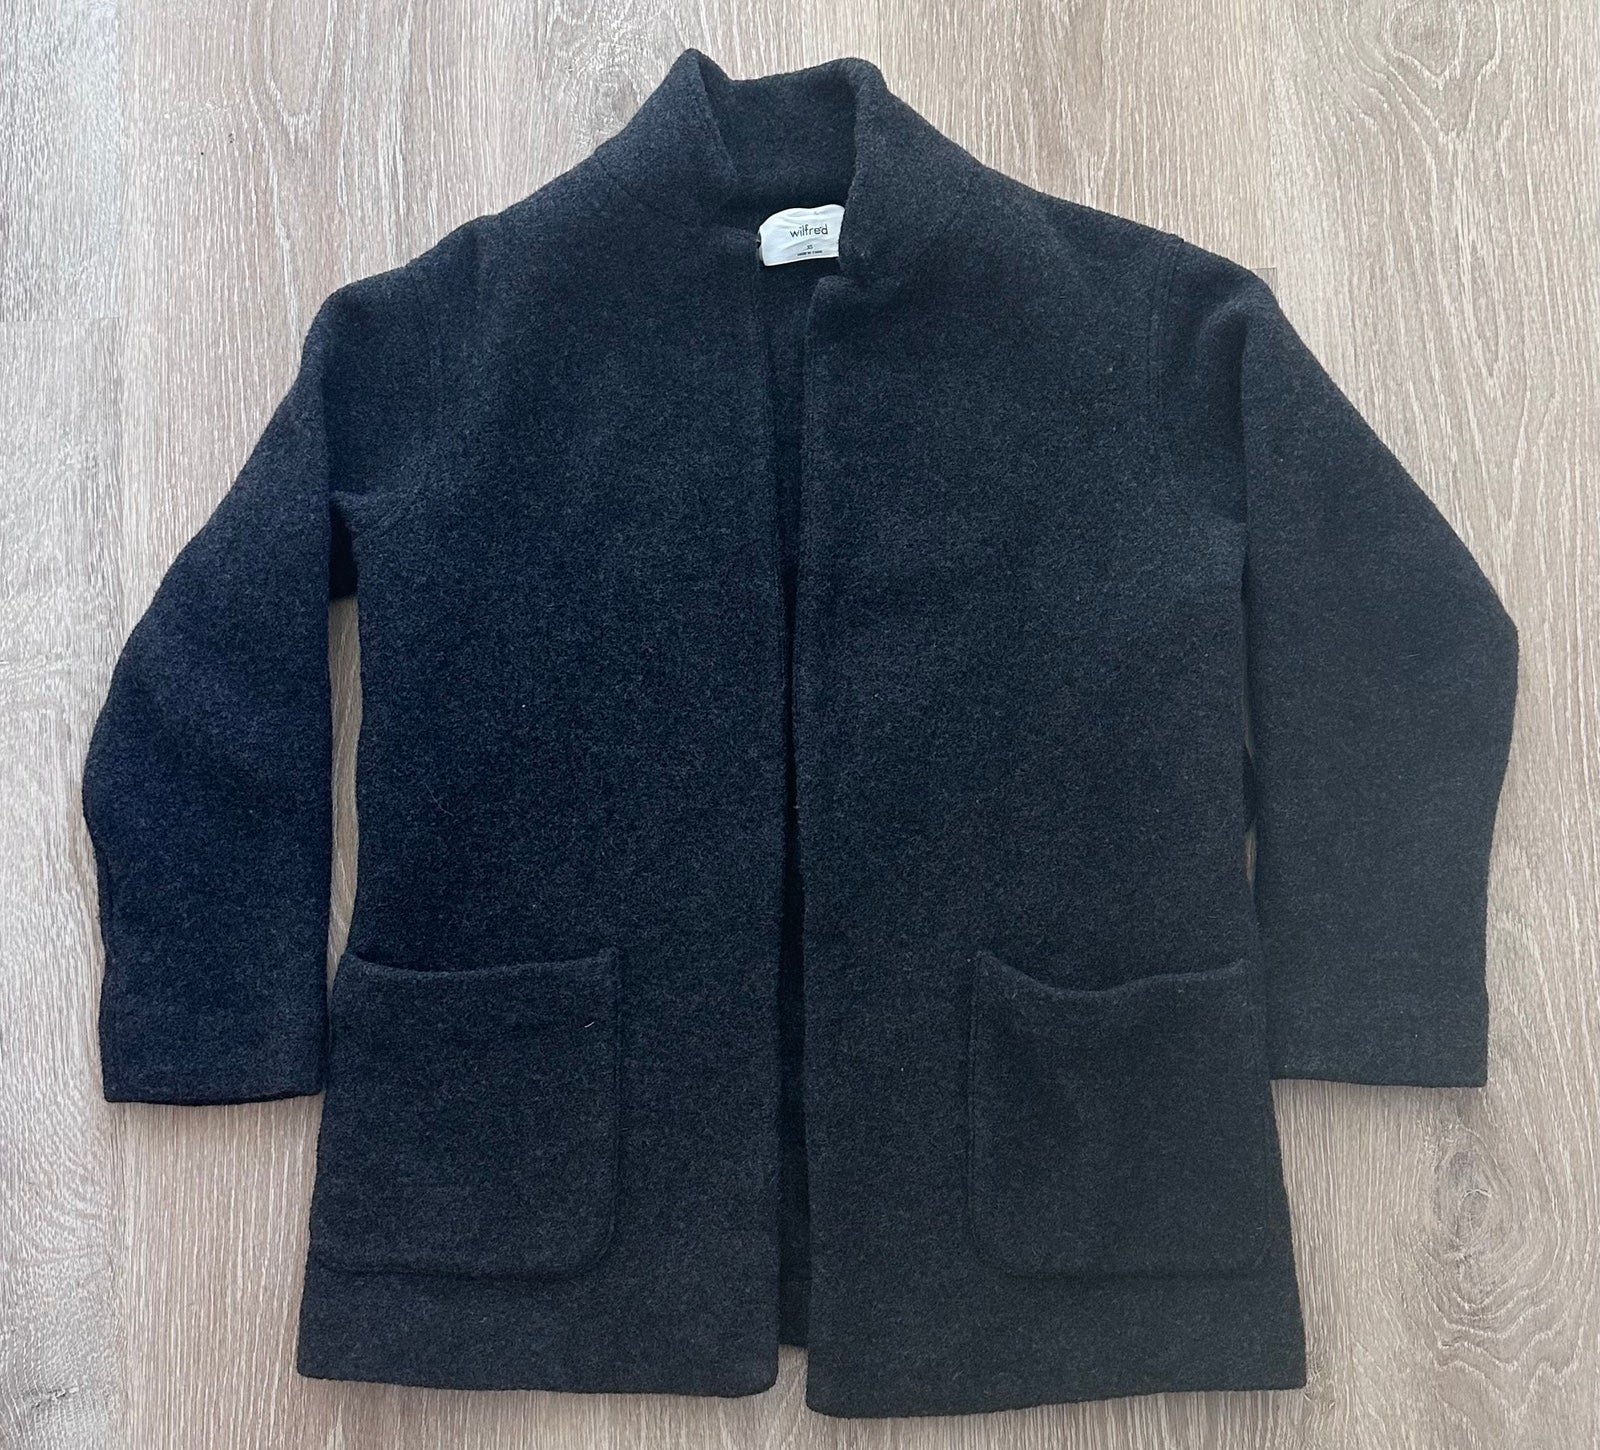 Wilfred 100% Merino Wool Grey Peacoat/Jacket|Aritzia|Sz XS 8HZQW8KxL